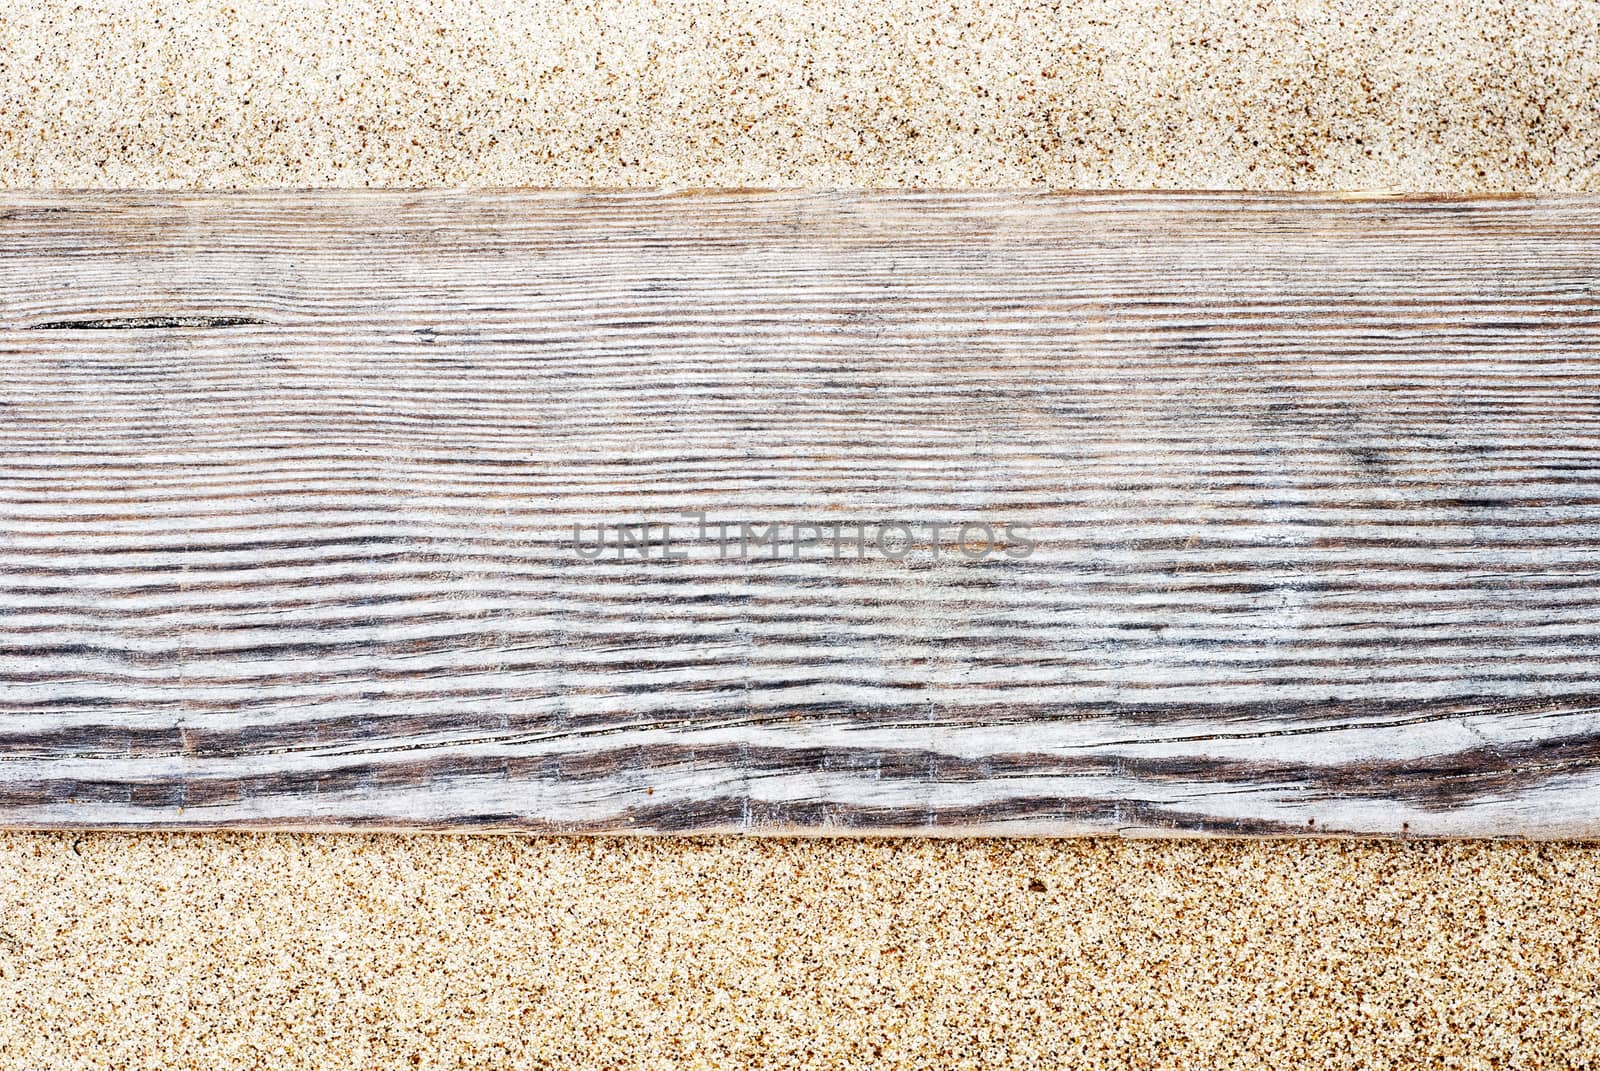 Wooden plank path on the sandy beach